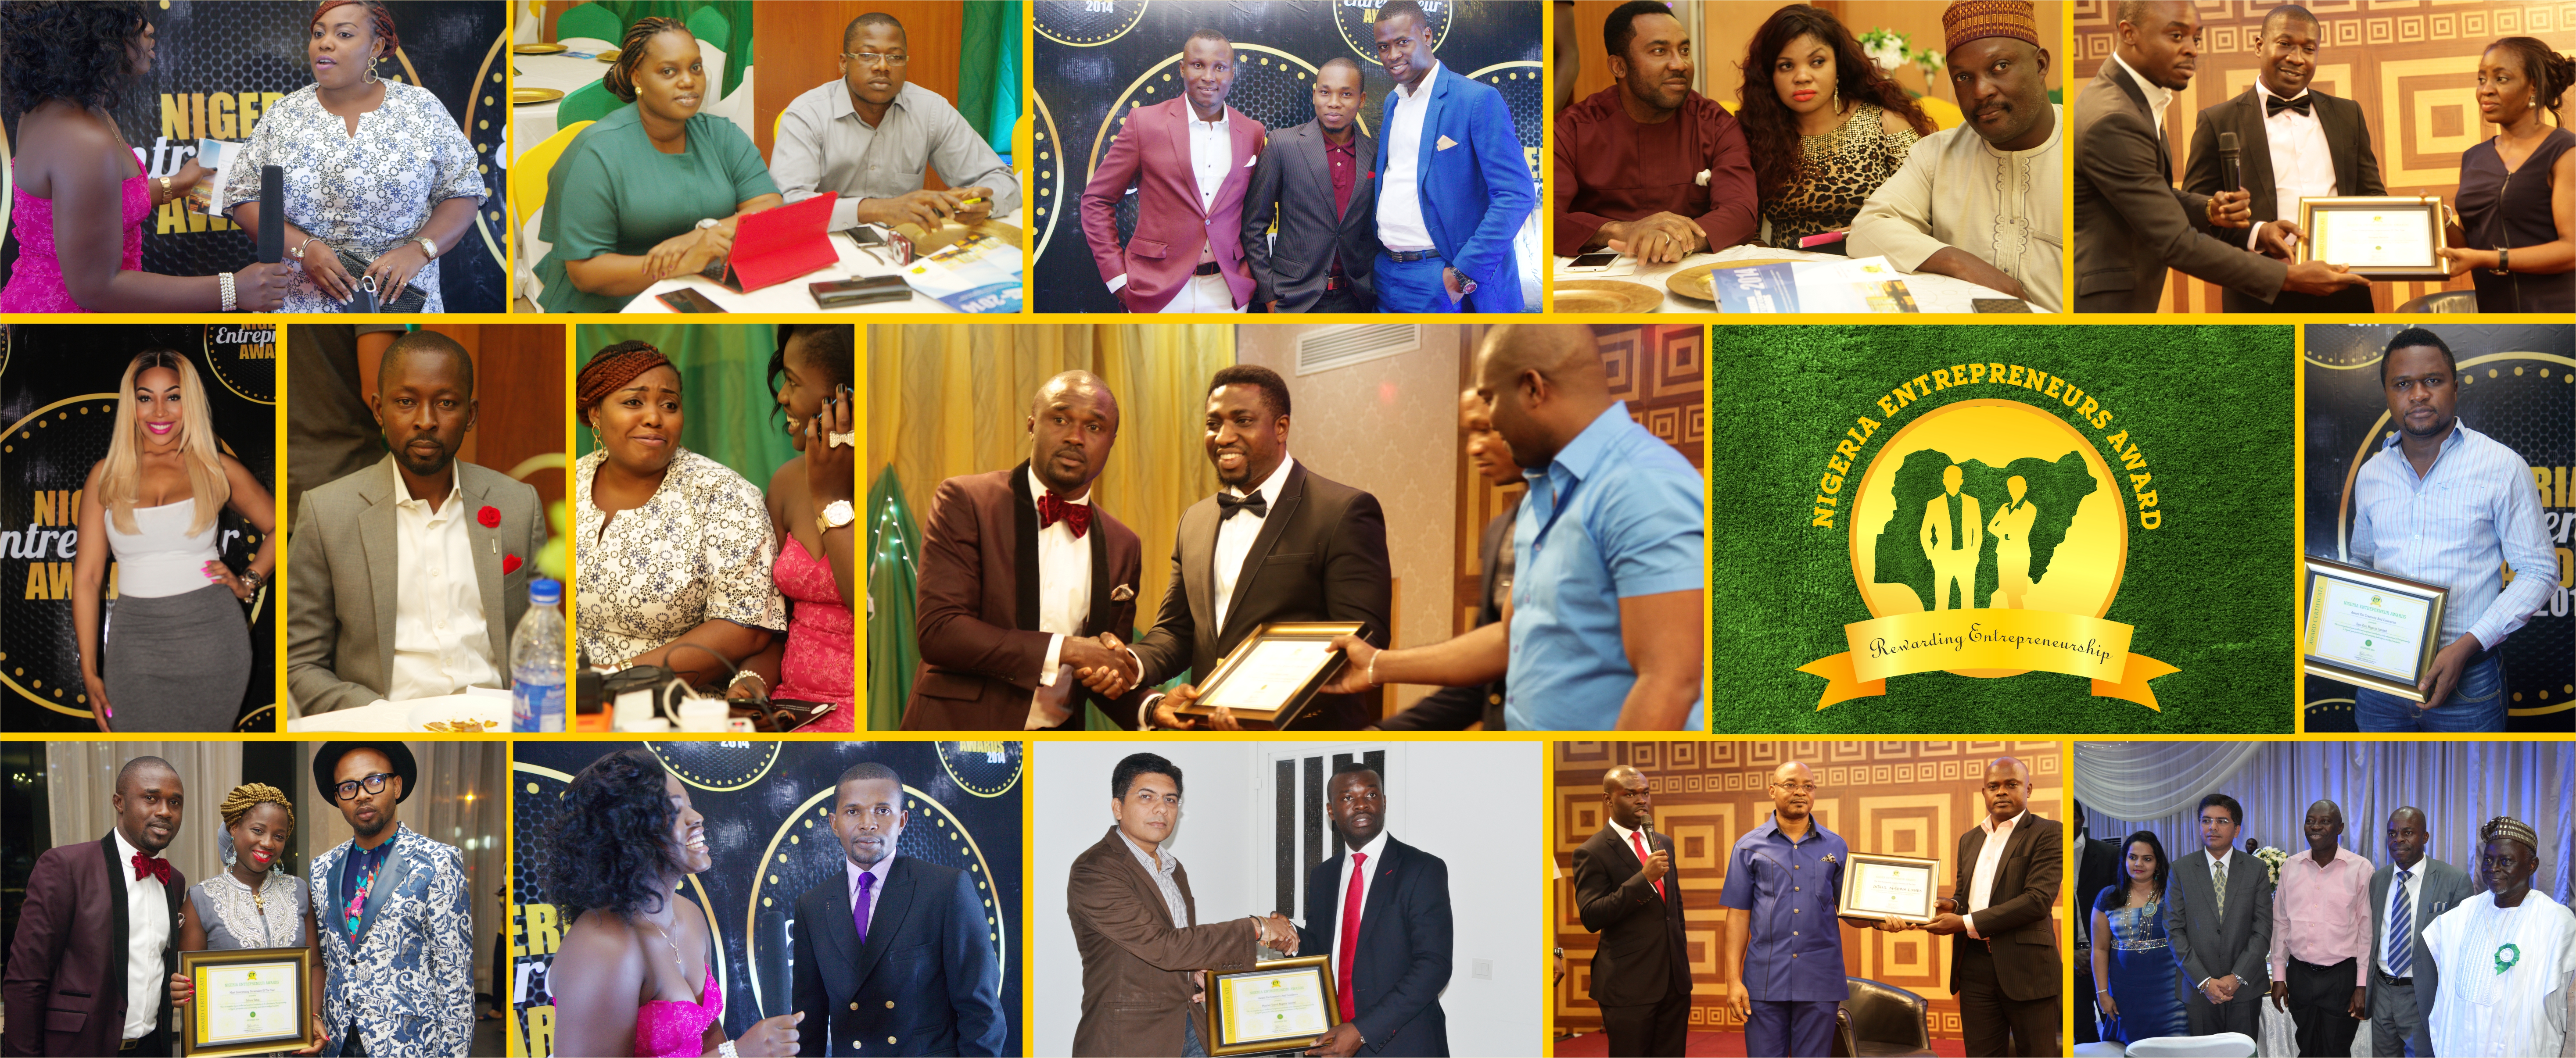 Nigeria Entrepreneurs Award 2015 is here again!